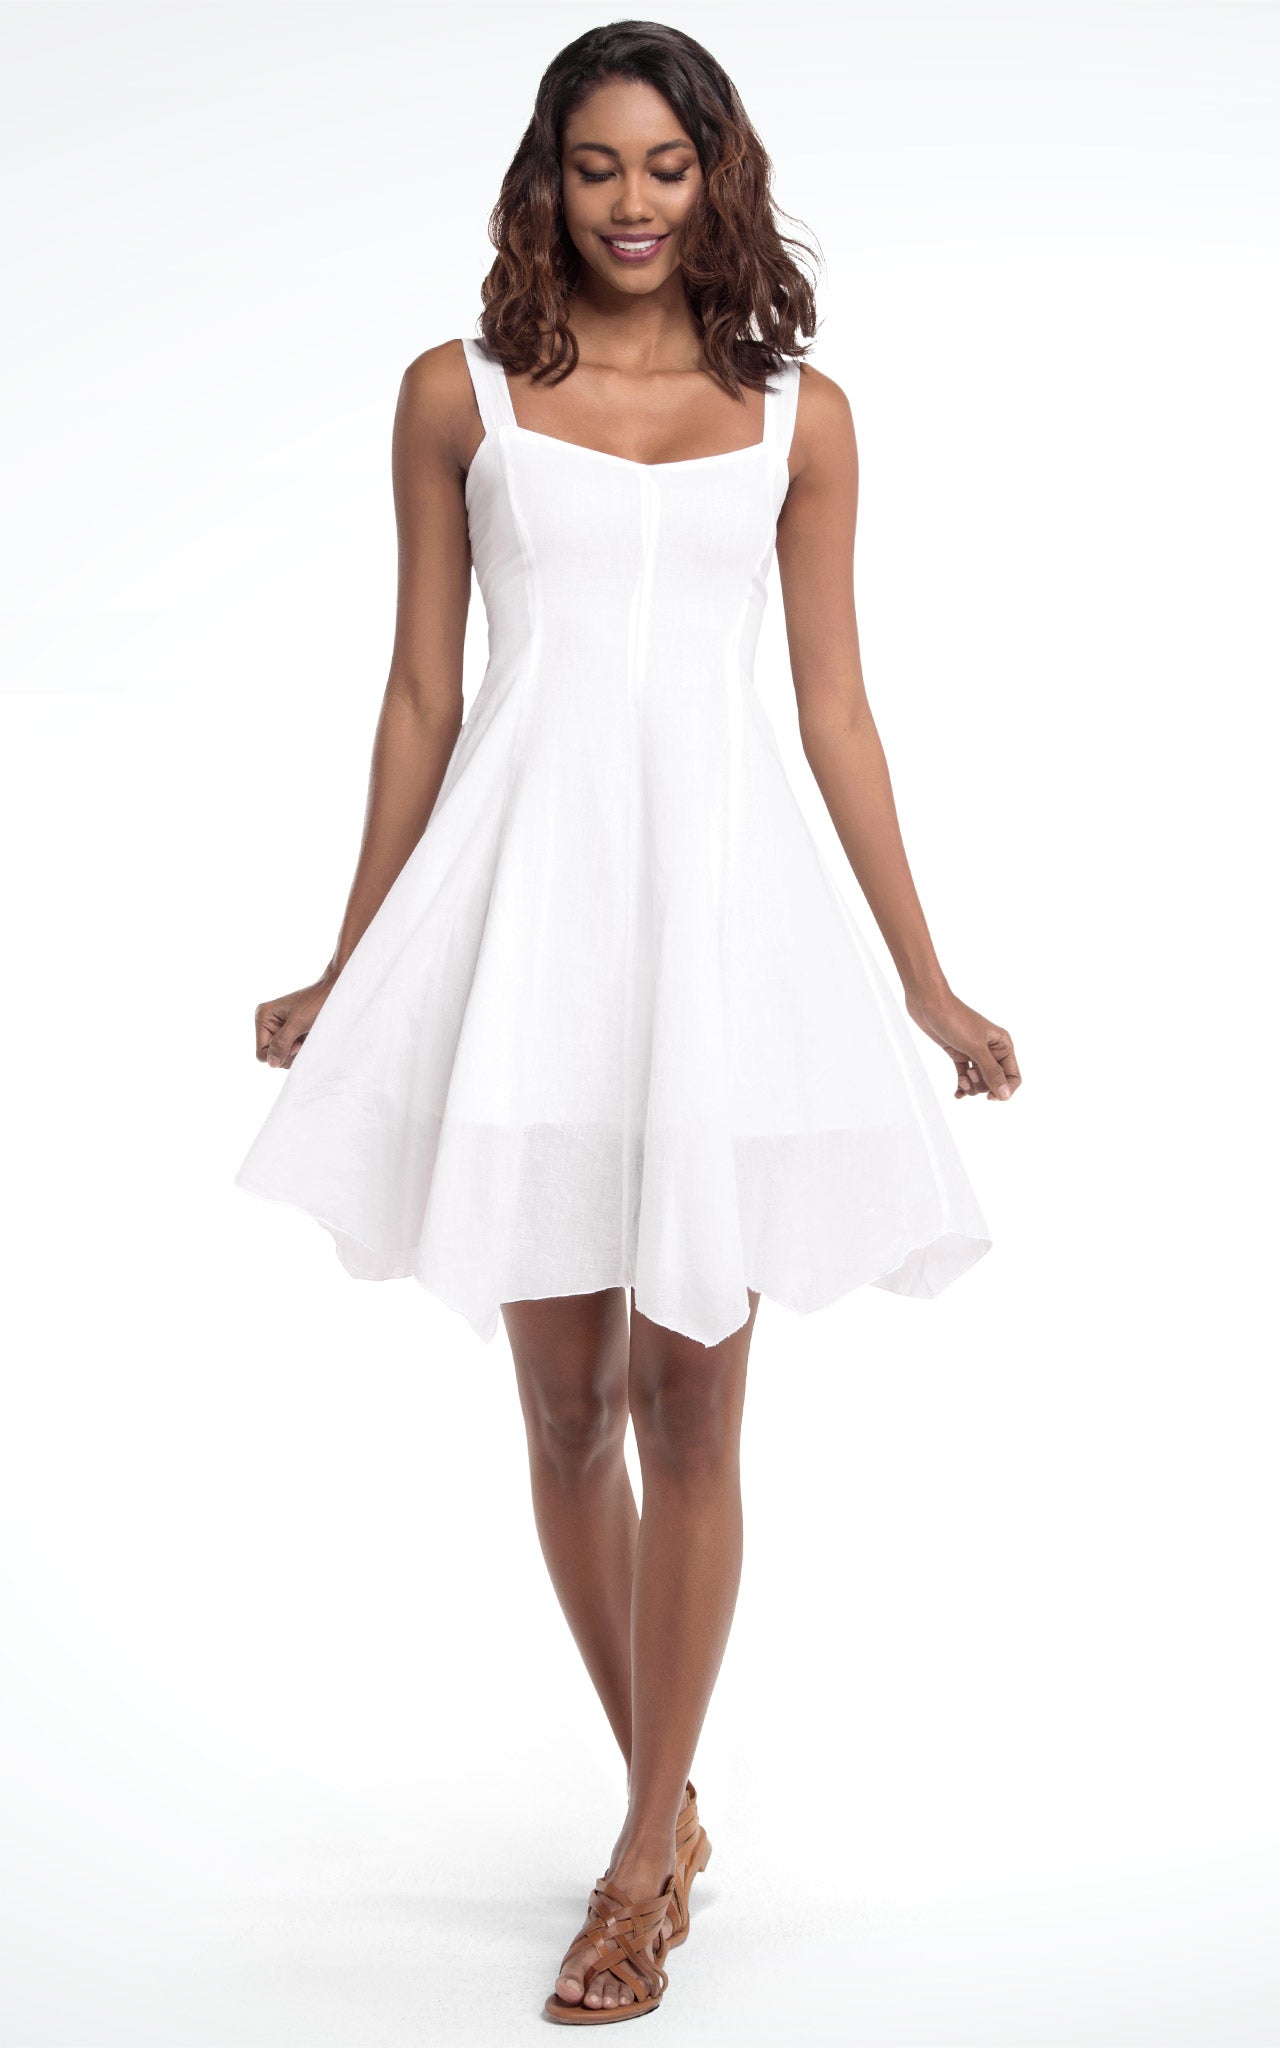 white dresses for sale online